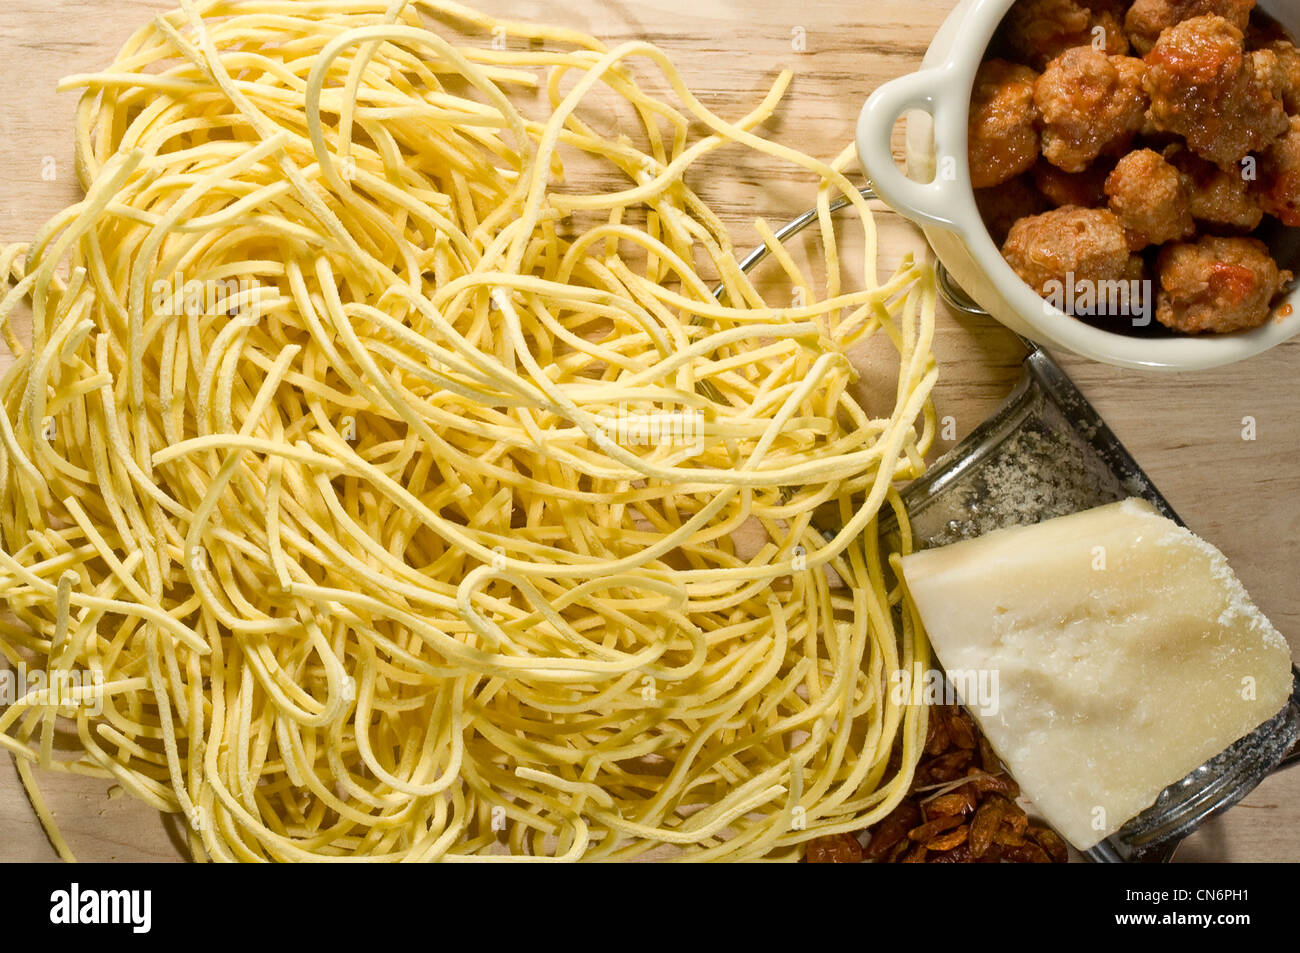 Abruzzo italy food fotografías e imágenes de alta resolución - Alamy